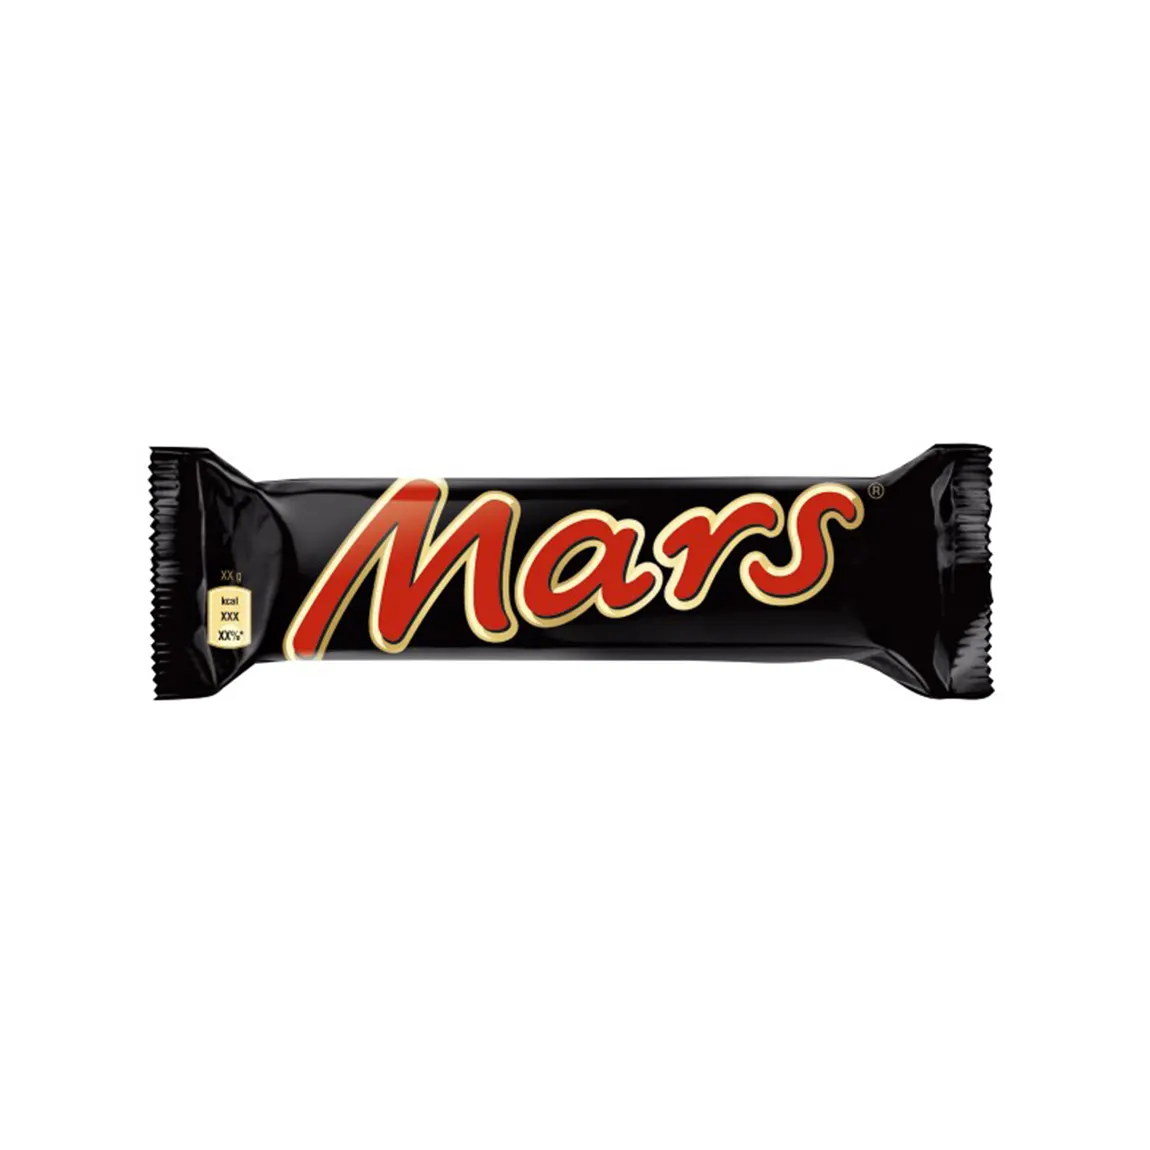 Mars Classic Single Chocolate Bars Made in Germany Chocolate MARS BAR 53G X 48